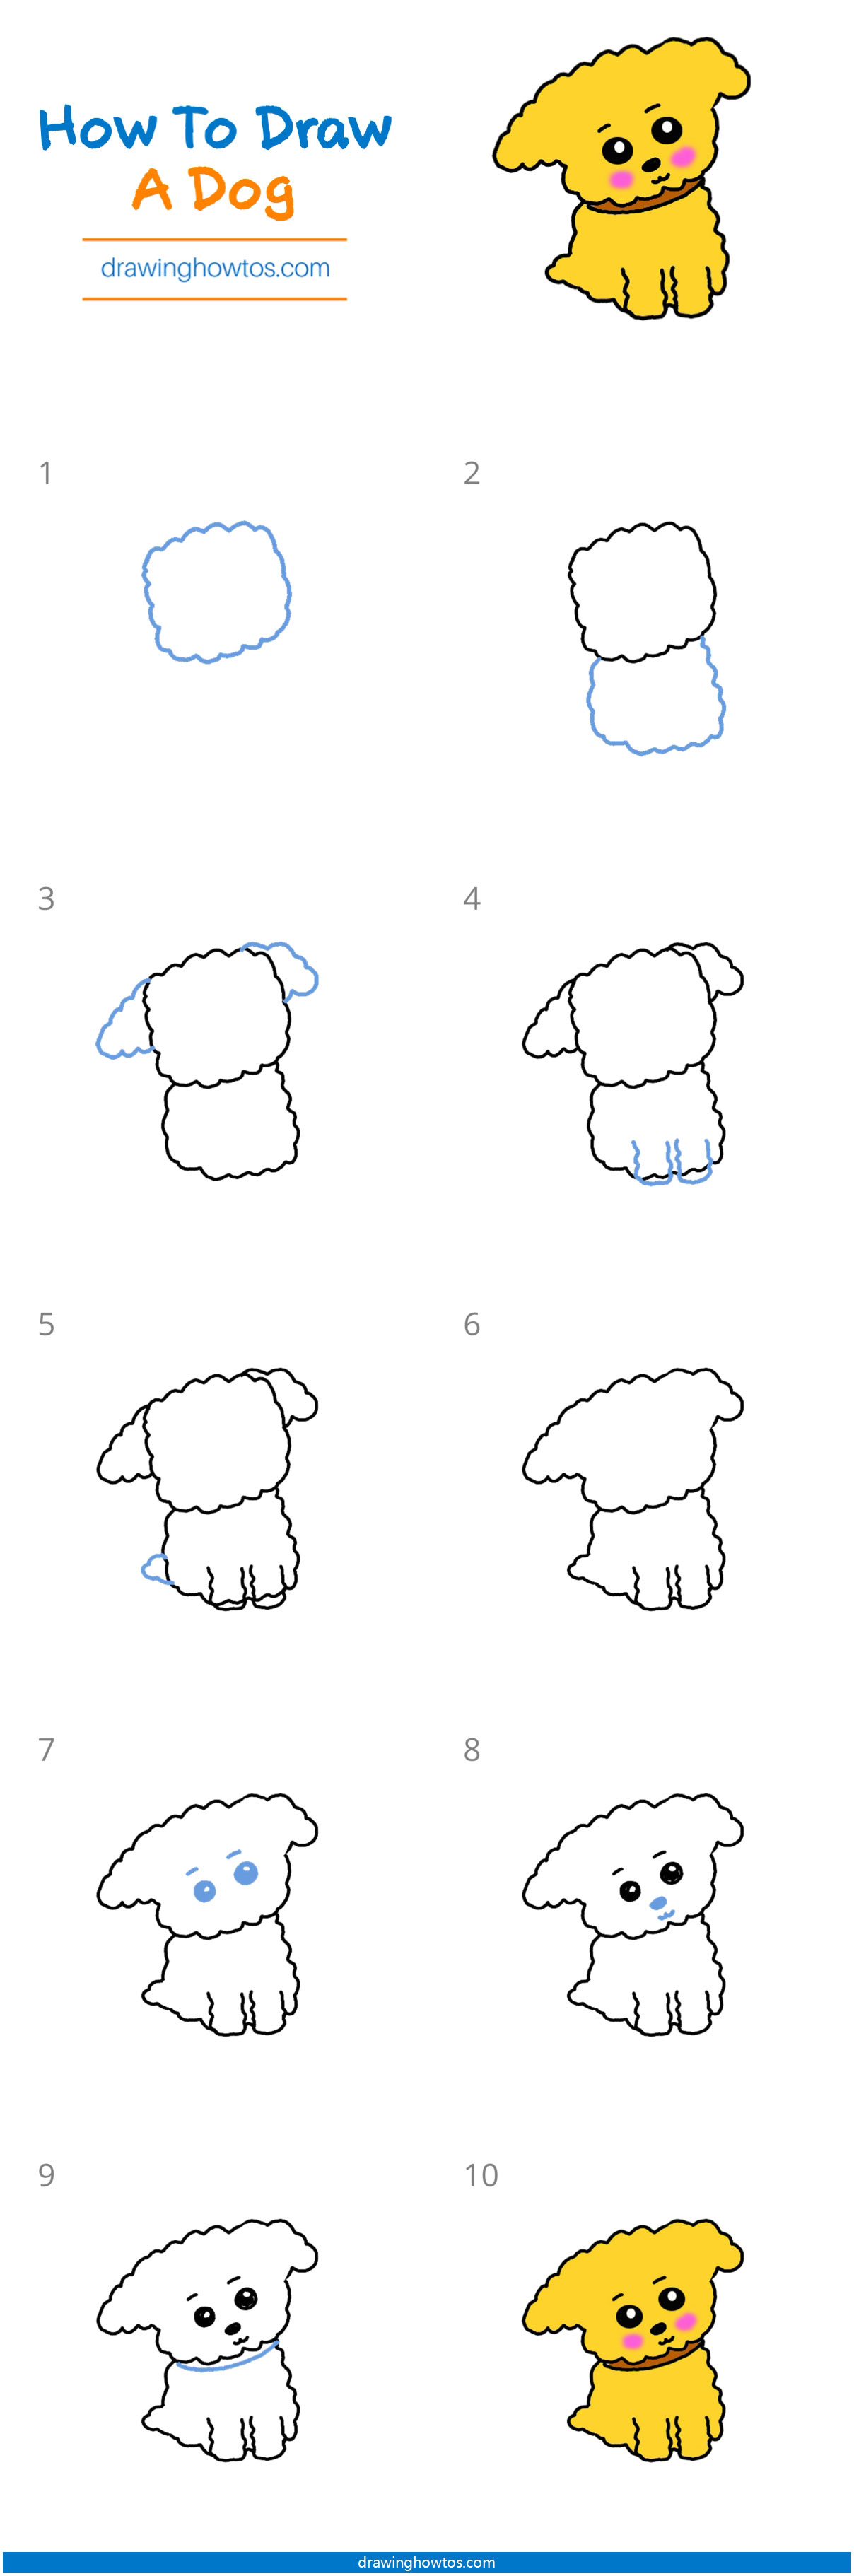 How to Draw a Teddy Bear Dog Step by Step